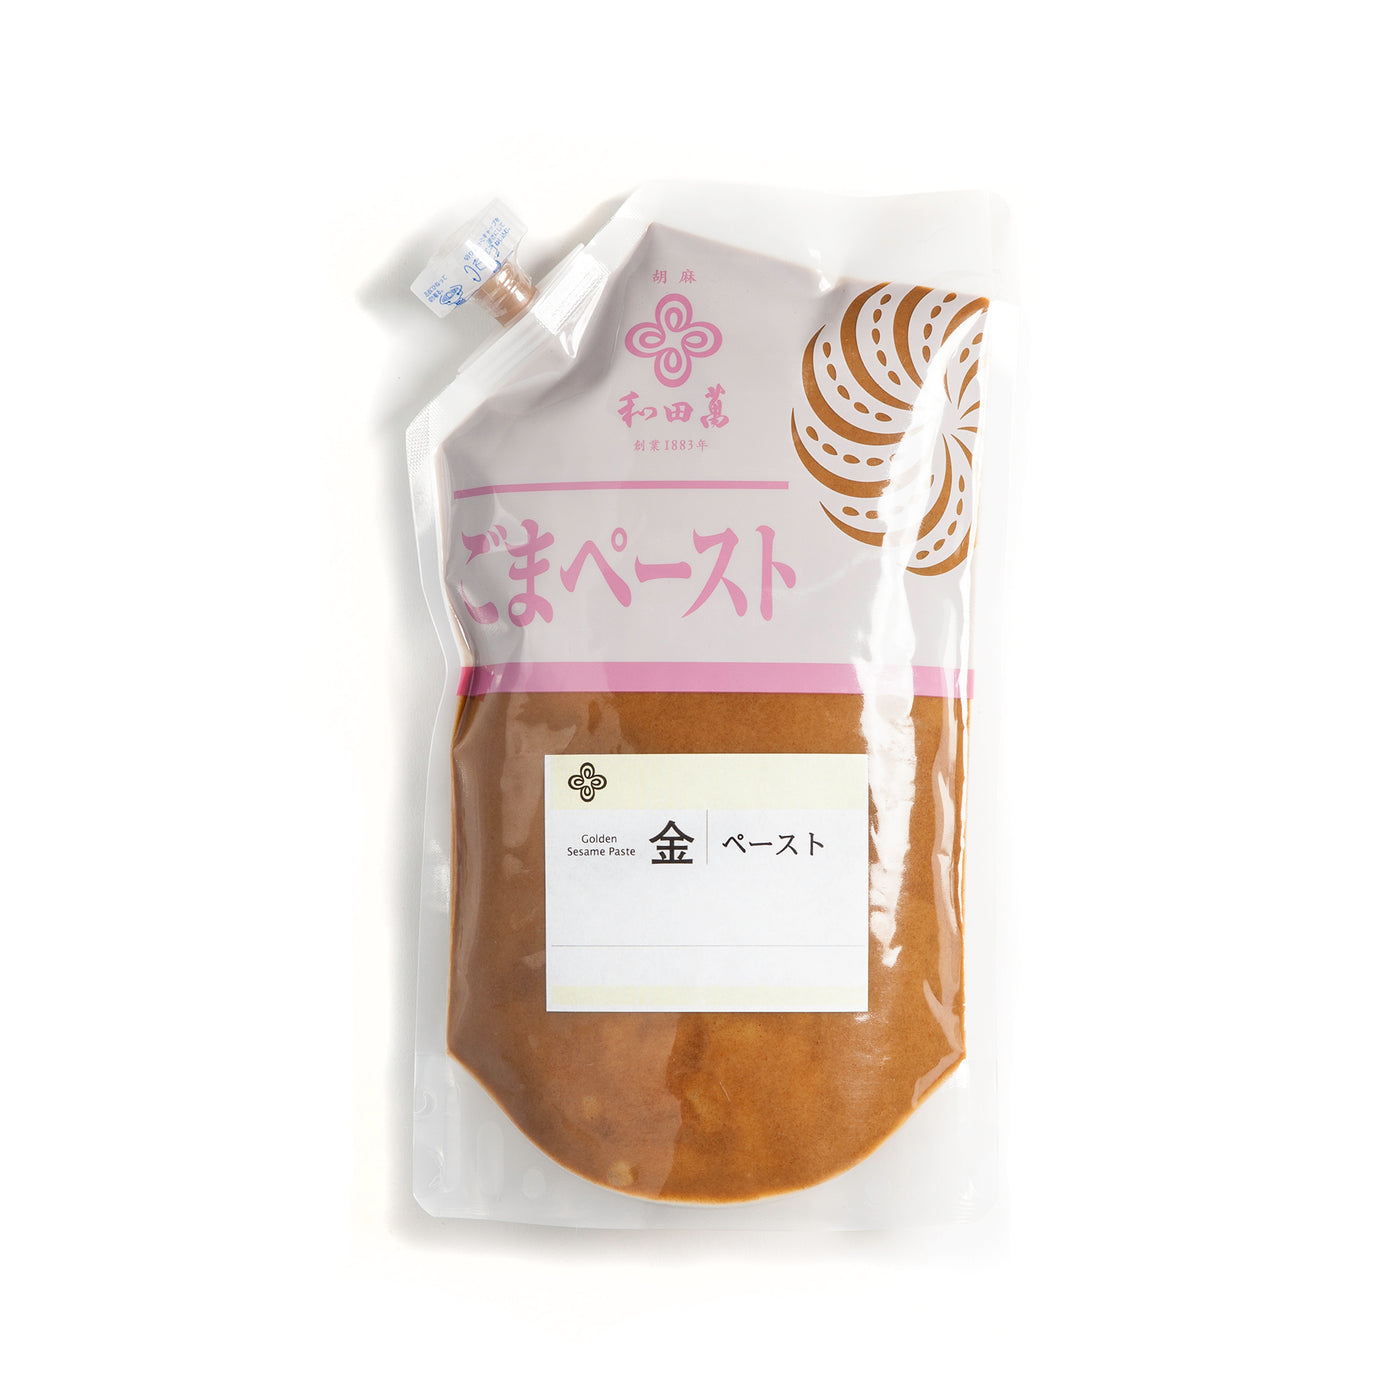 Golden Sesame Paste - 1kg